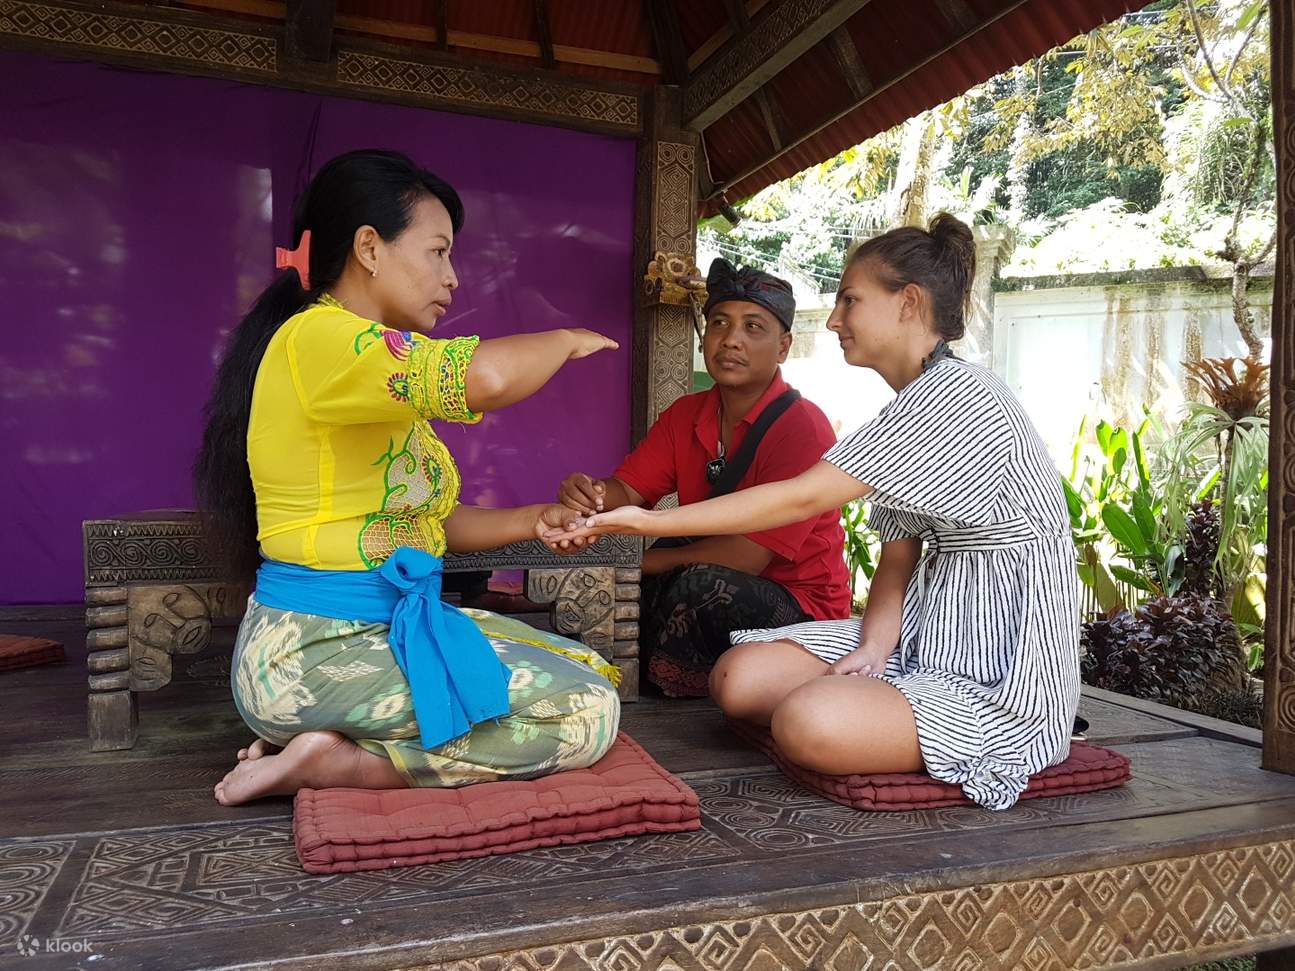 balinese healer performing palm reading